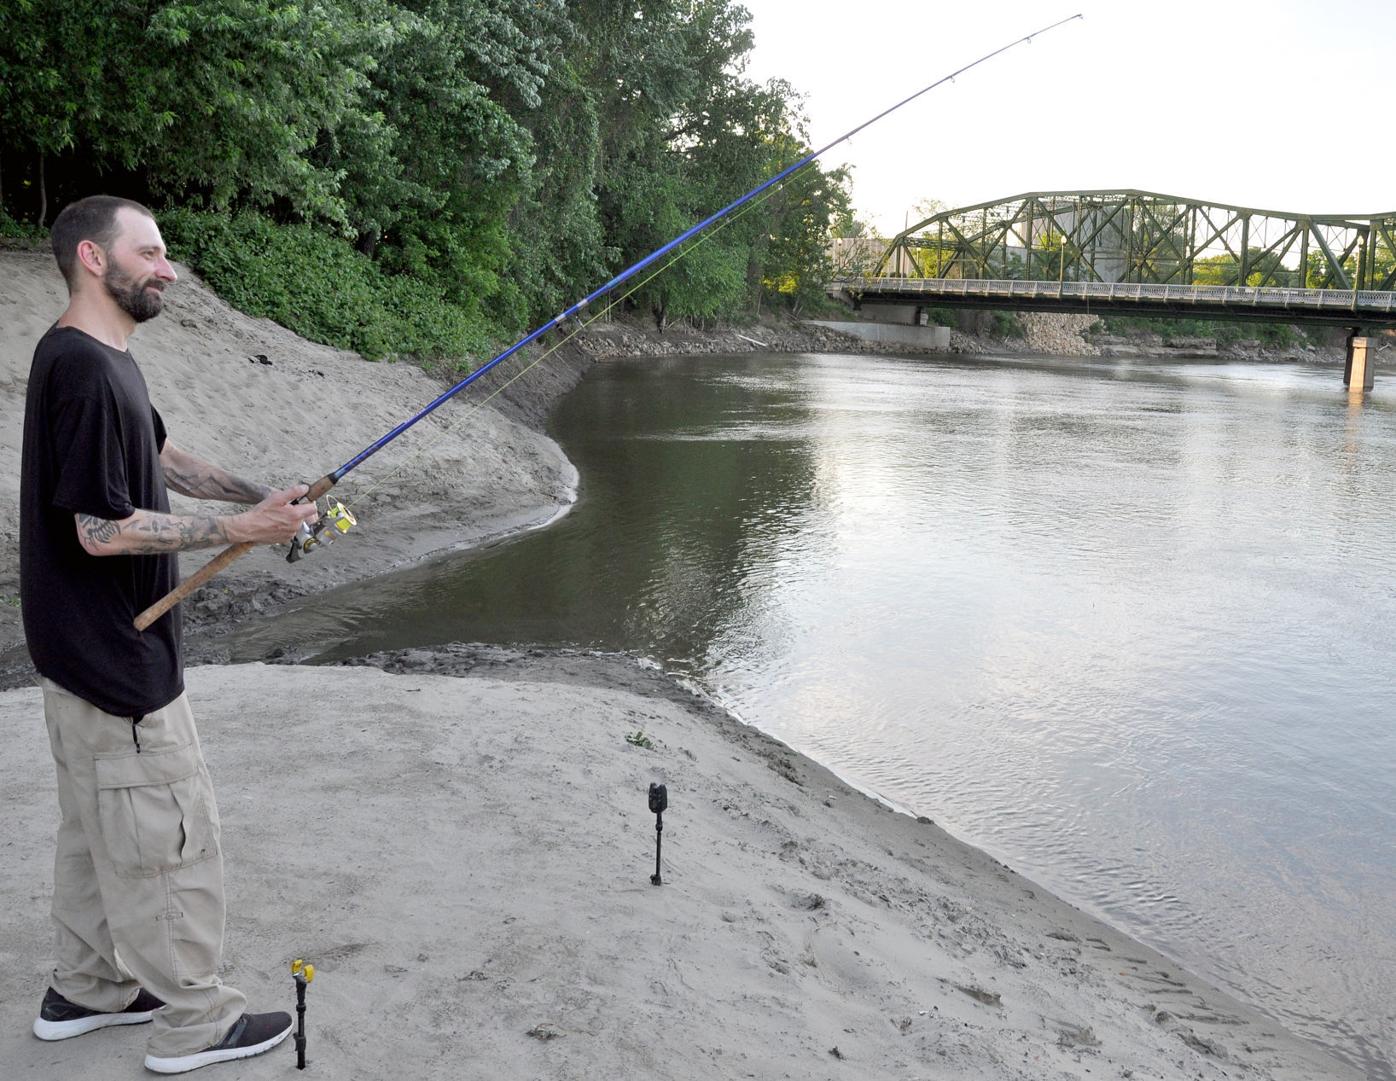 Minnesota River catfishing is worth the weight